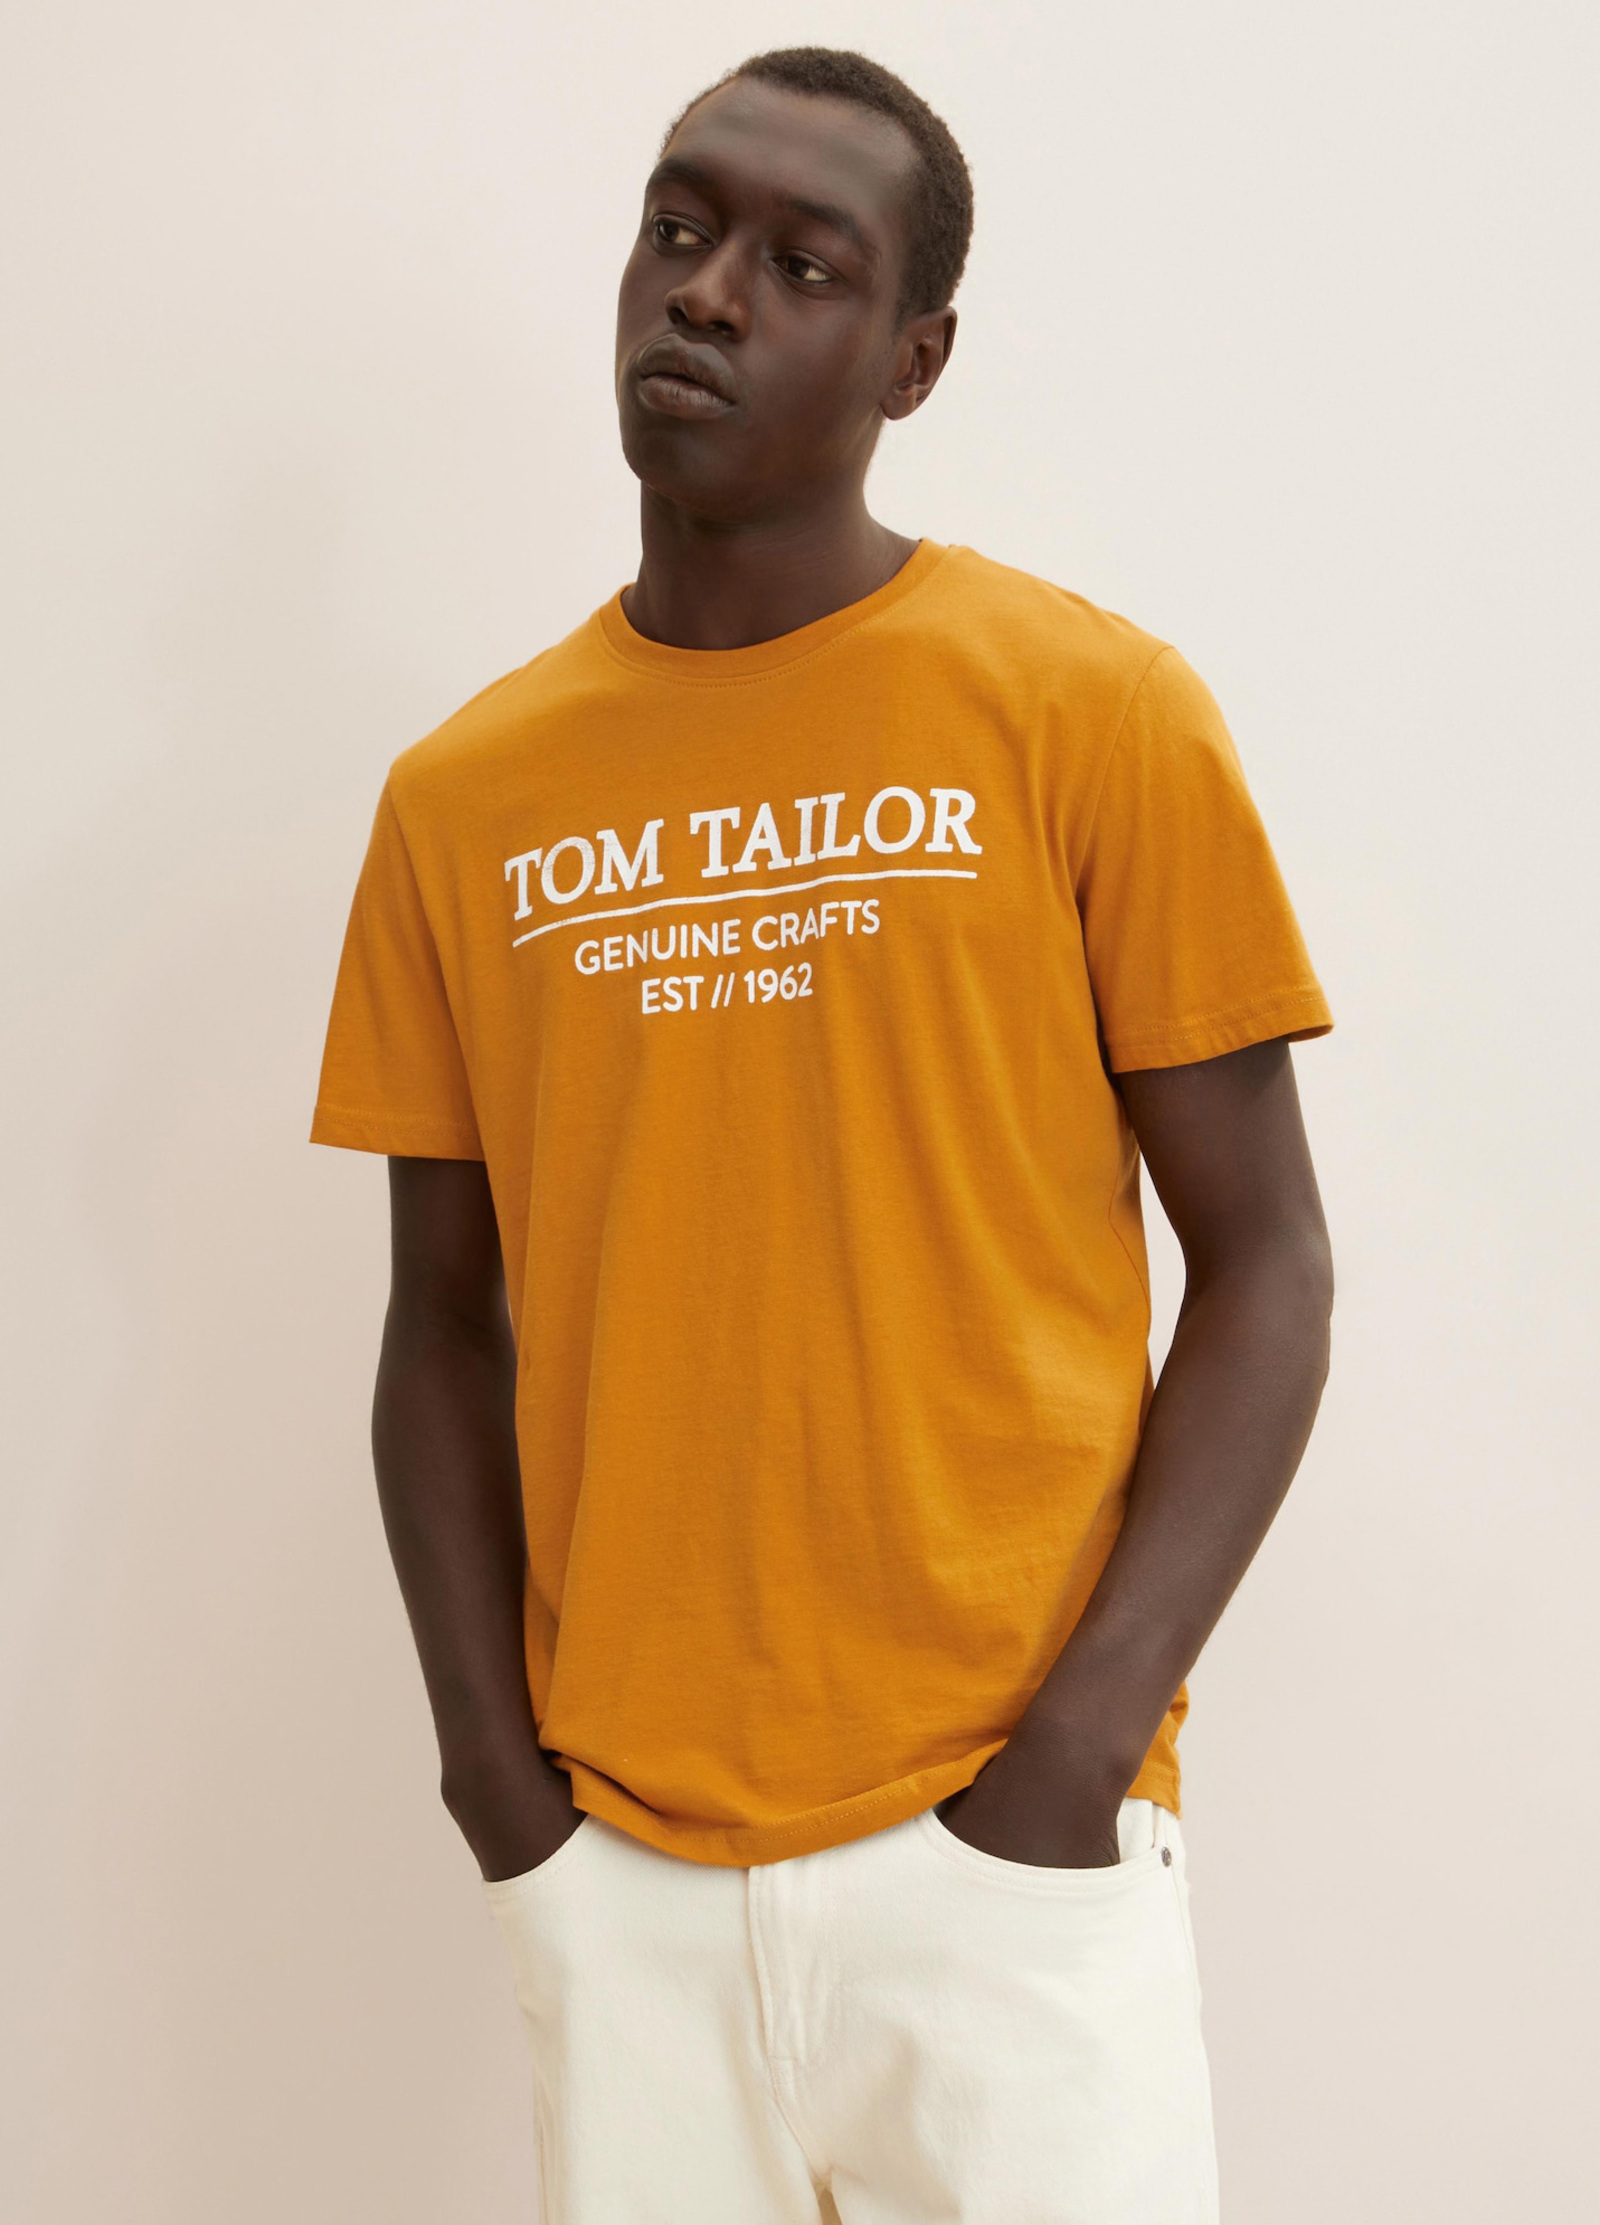 Tom Tailor® Logo Brown Peanut Butter L T-shirt Size 